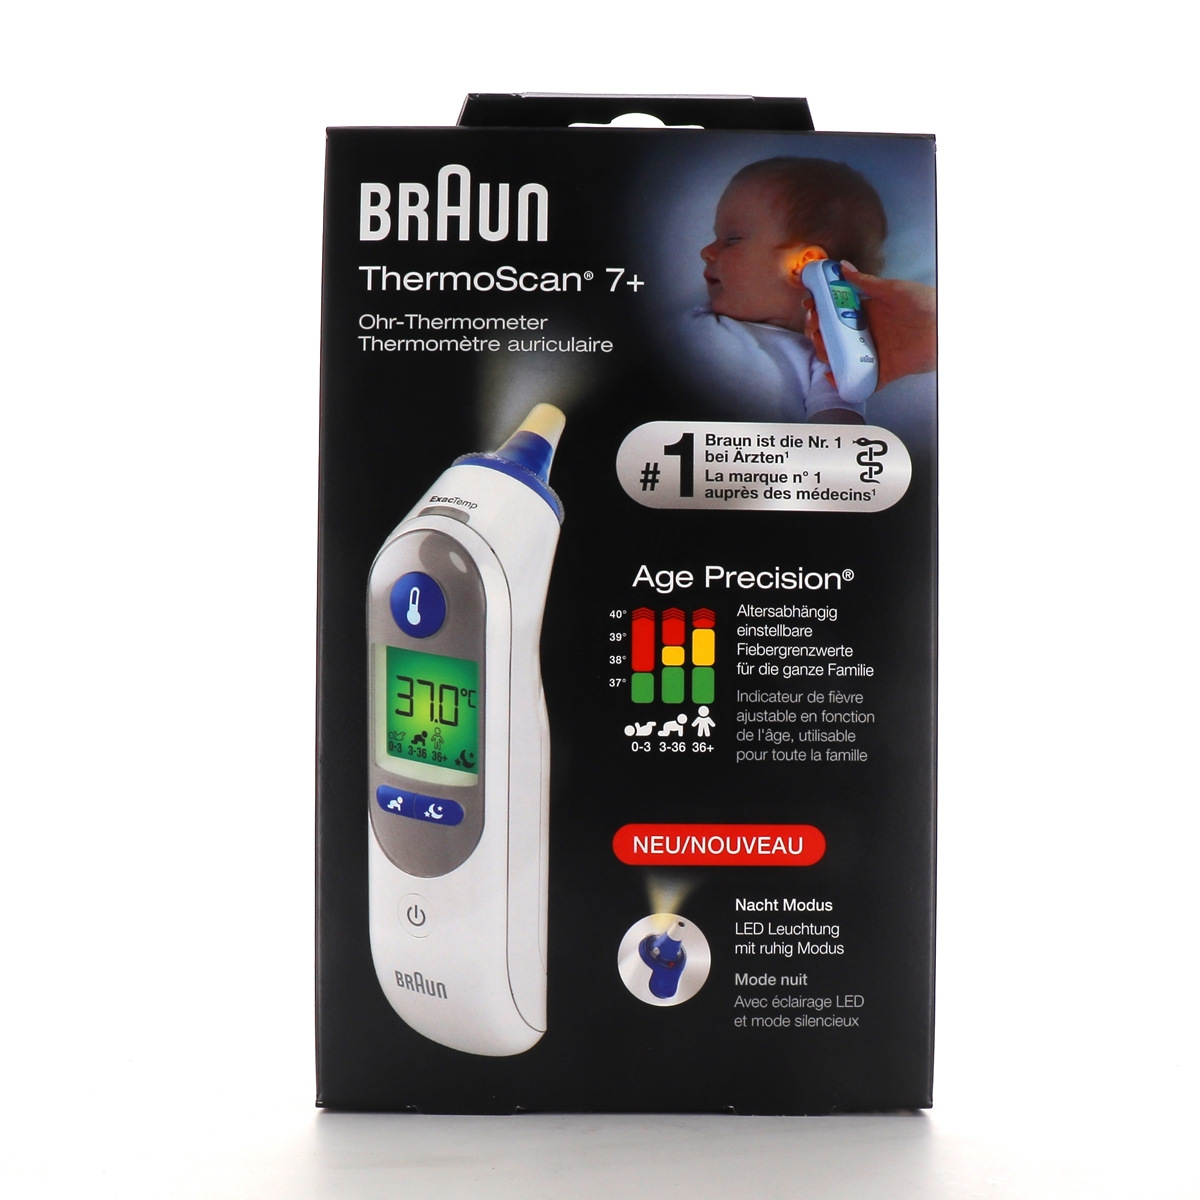 Braun Thermoscan 7+ thermomètre auriculaire - Prise de température